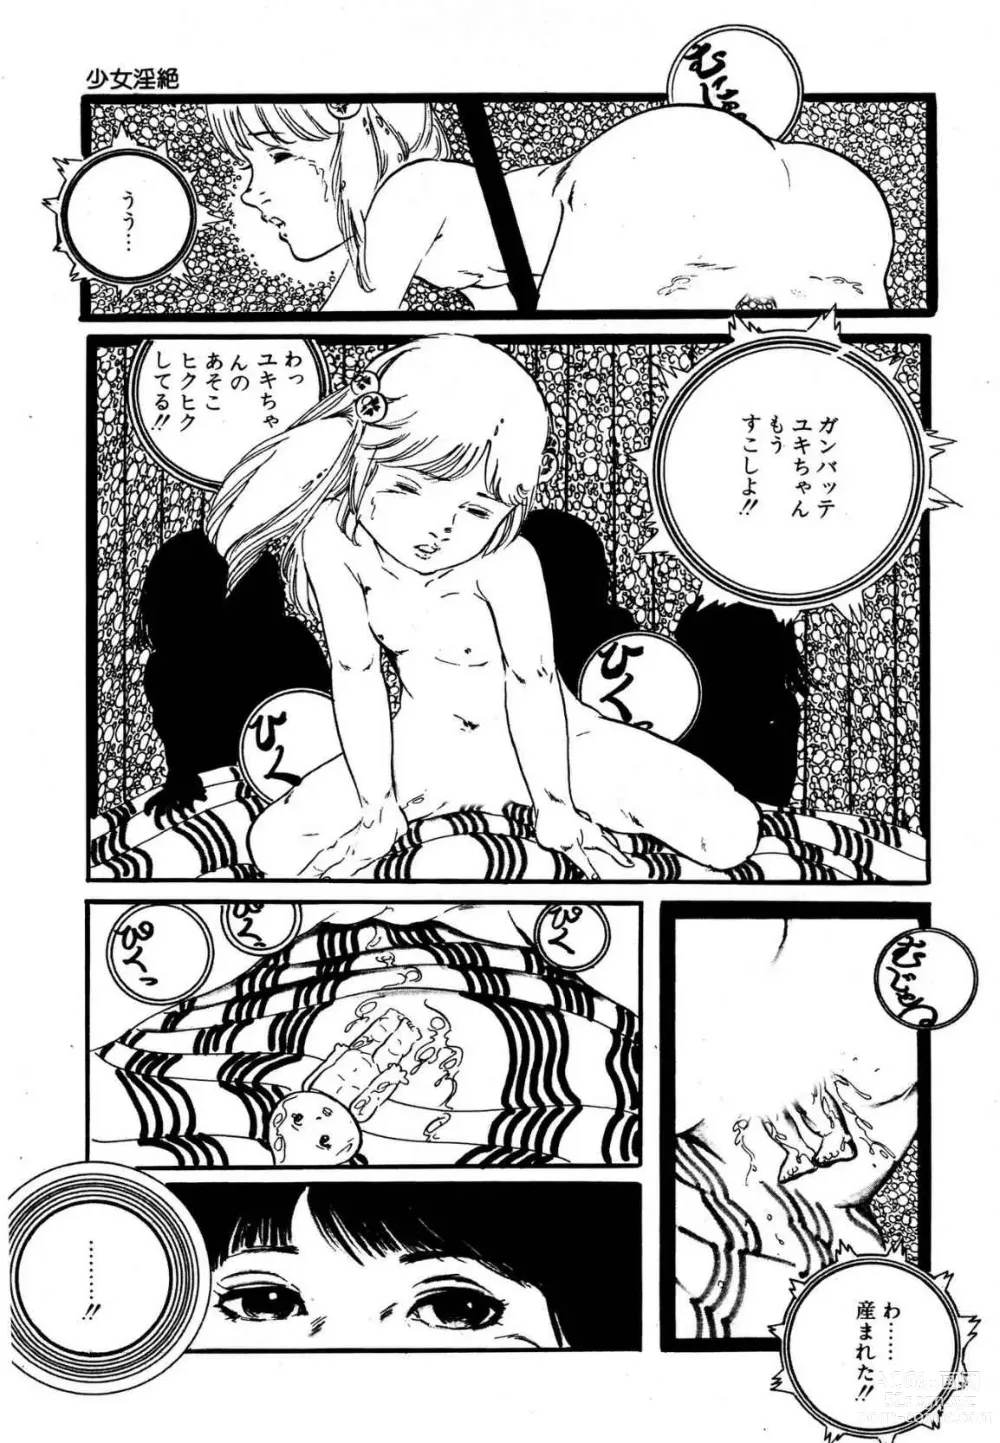 Page 191 of manga Dreaming fairy